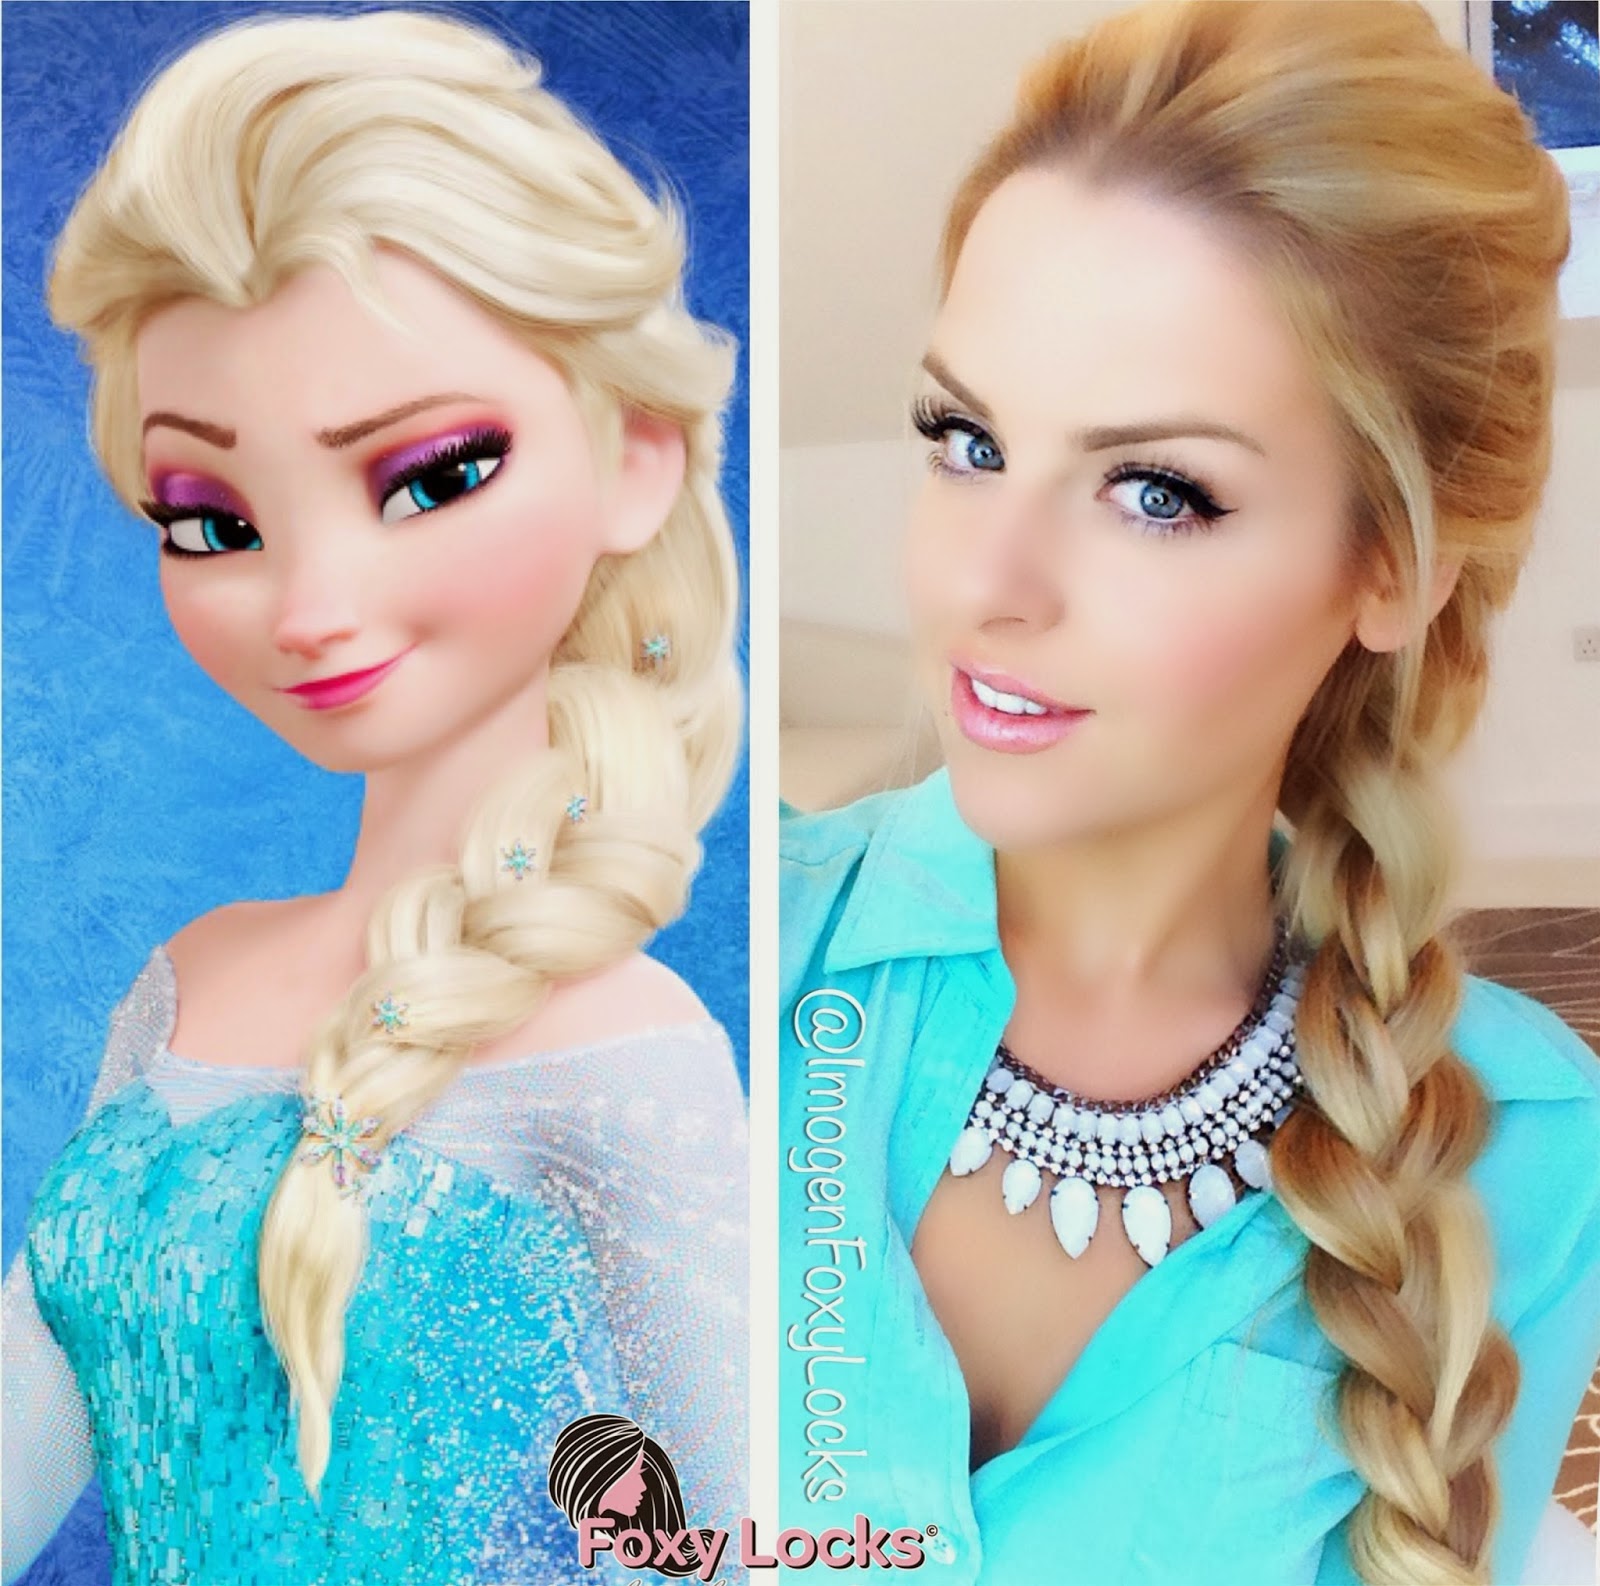 Braided Crown: Elsa's Braid Hair Tutorial from Disney's 